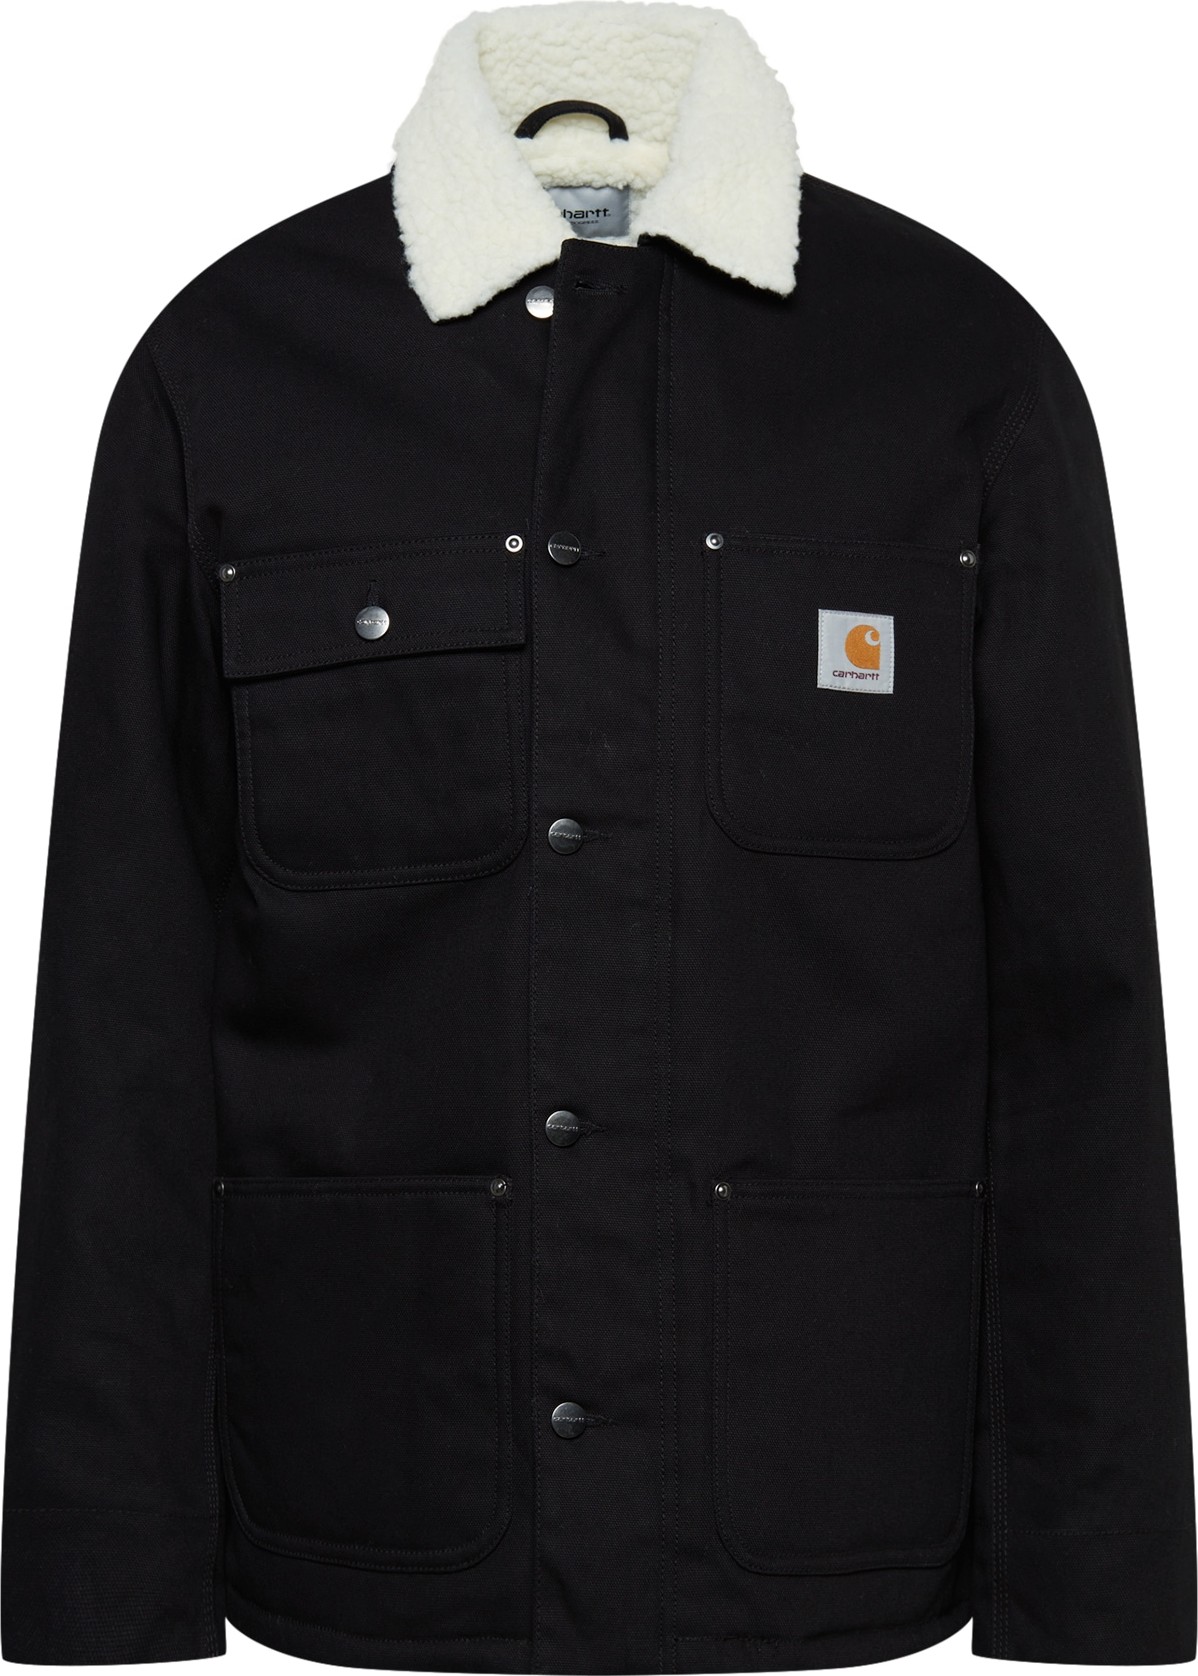 Carhartt WIP Zimní bunda 'Fairmount' barva bílé vlny / černá